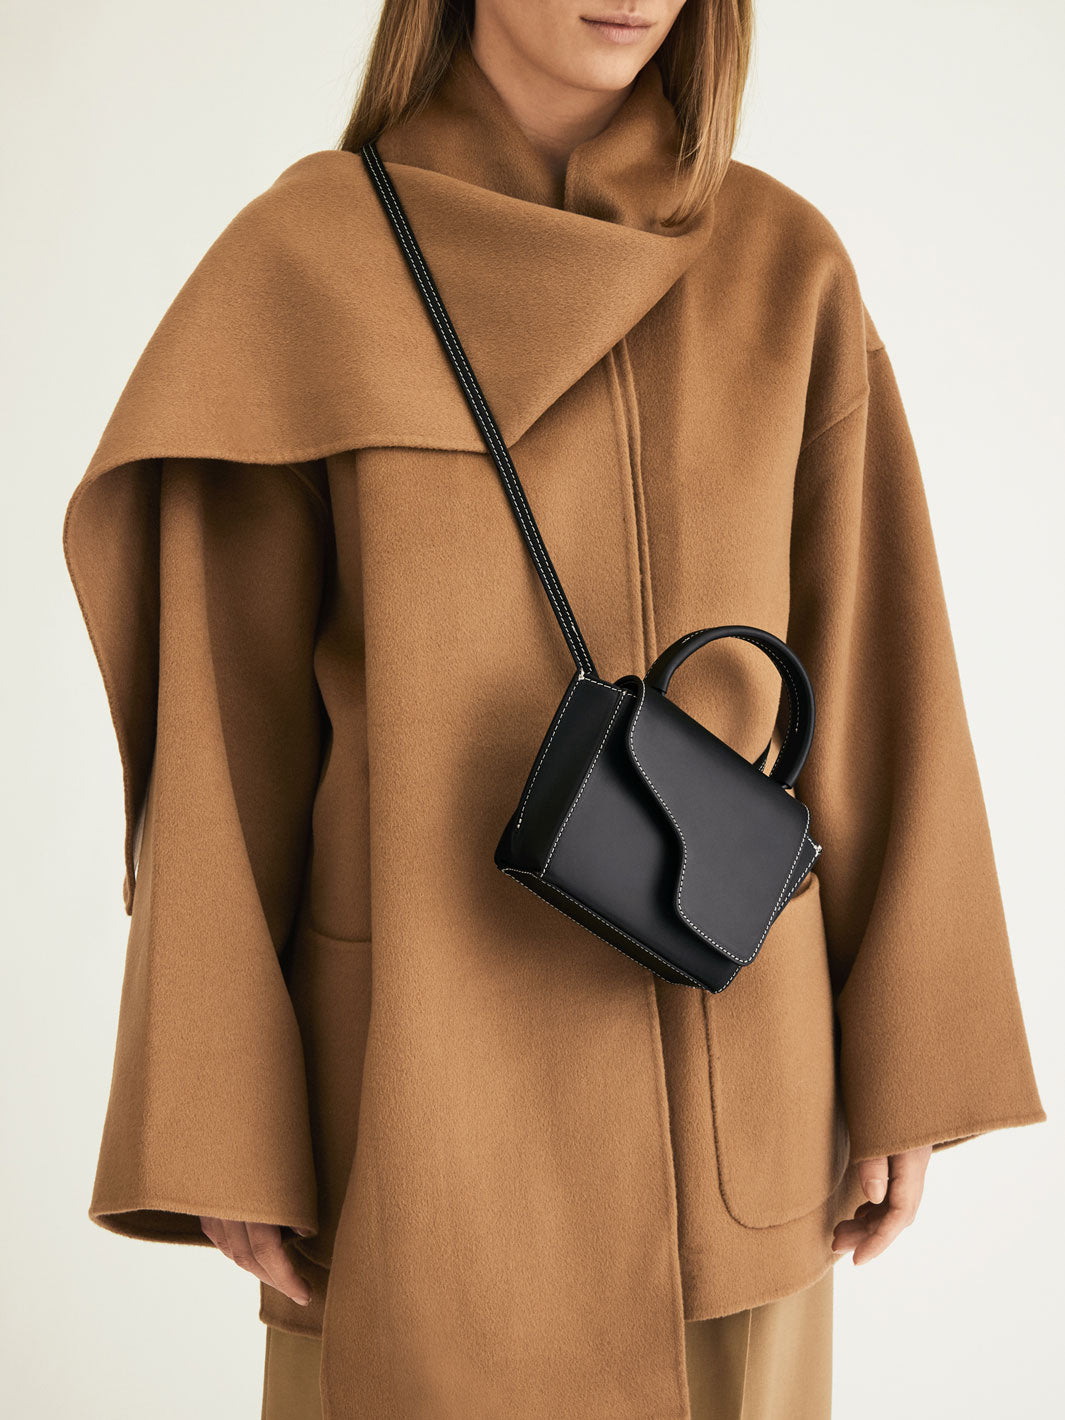 Buy ATP ATELIER Montalcino Leather Mini Handbag - Cypress